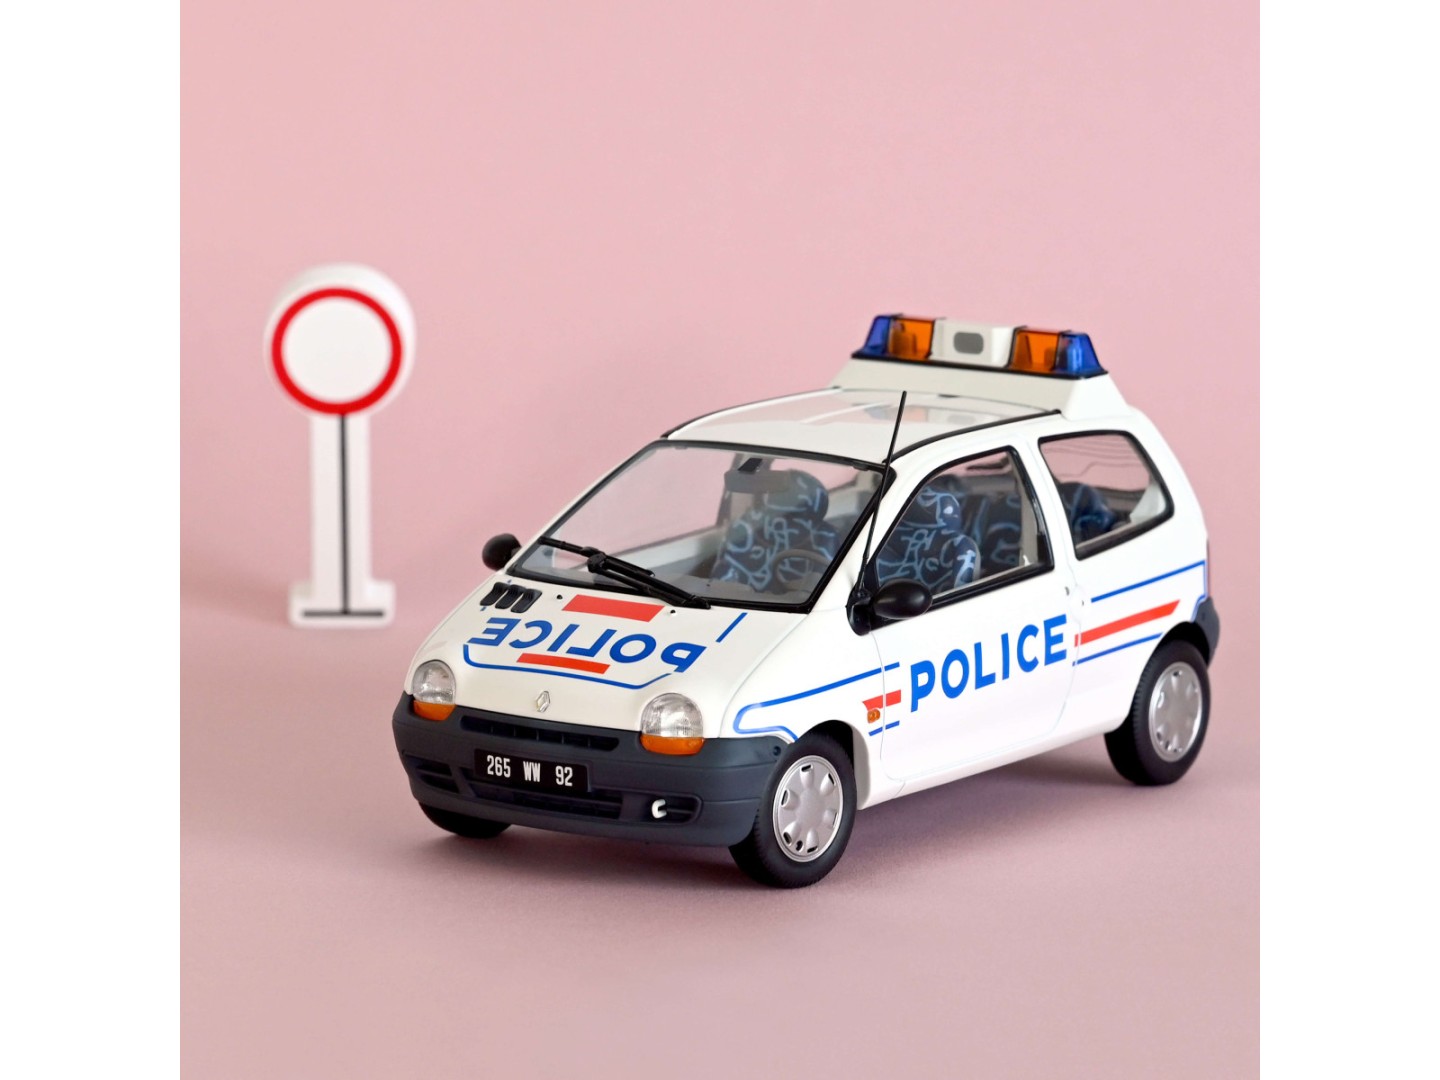 Marketplace - Renault Twingo 1995 Police Nationale - Norev - 1:18